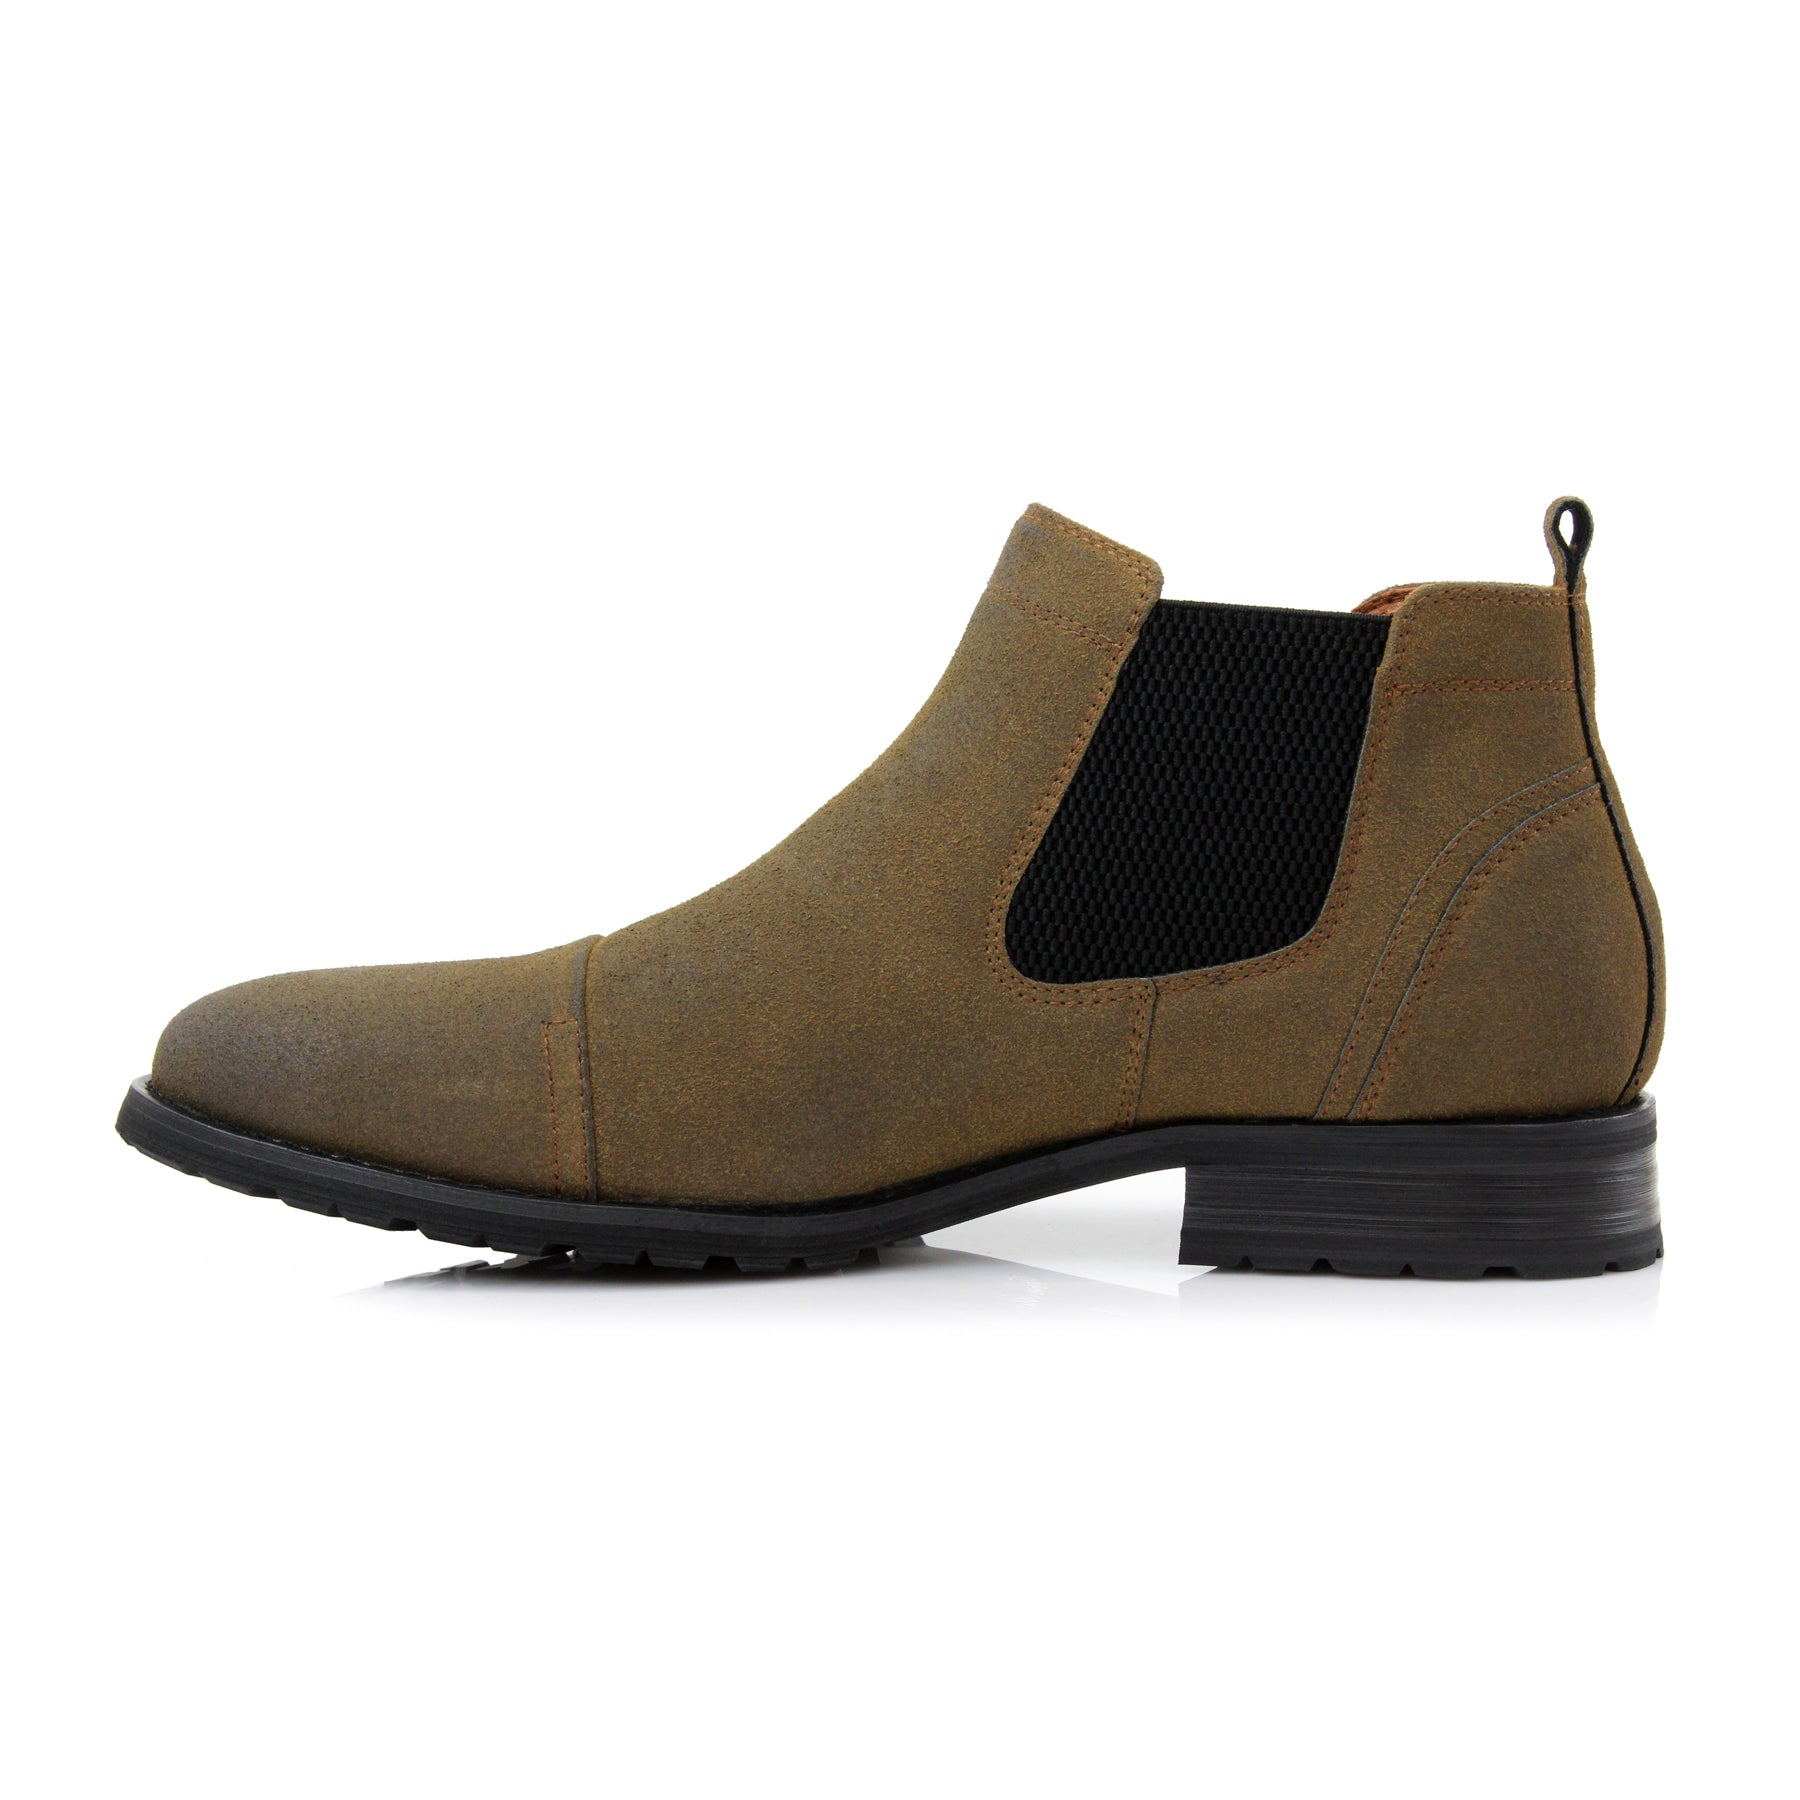 Suede Chelsea Boots | Sterling by Ferro Aldo | Conal Footwear | Inner Side Angle View